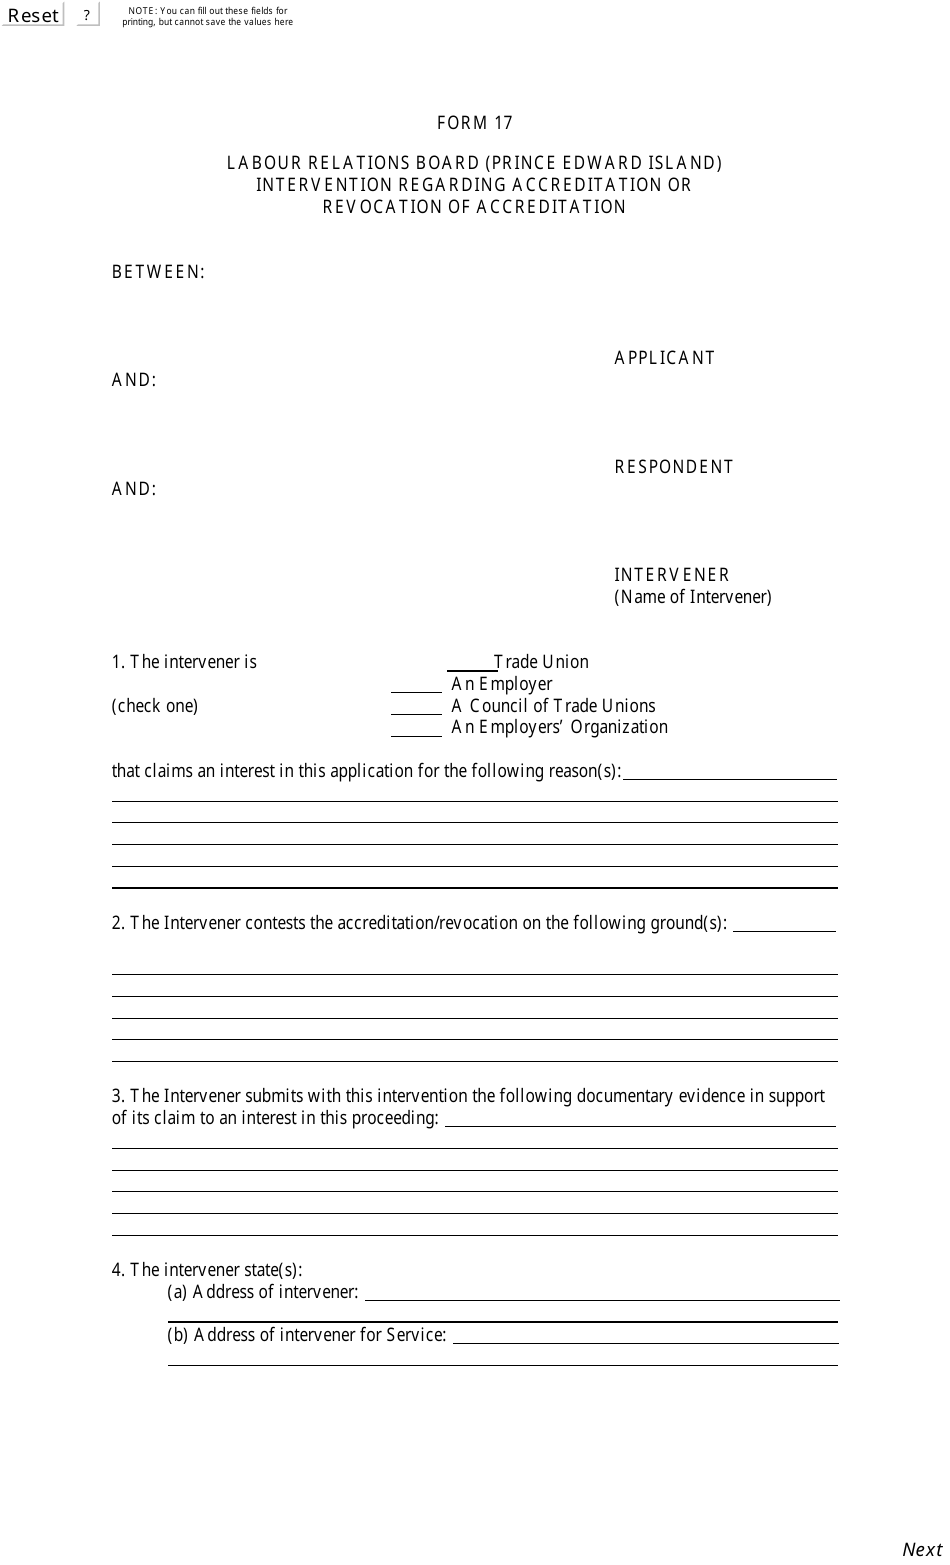 Form 17 Intervention Regarding Accreditation or Revocation of Accreditation - Prince Edward Island, Canada, Page 1